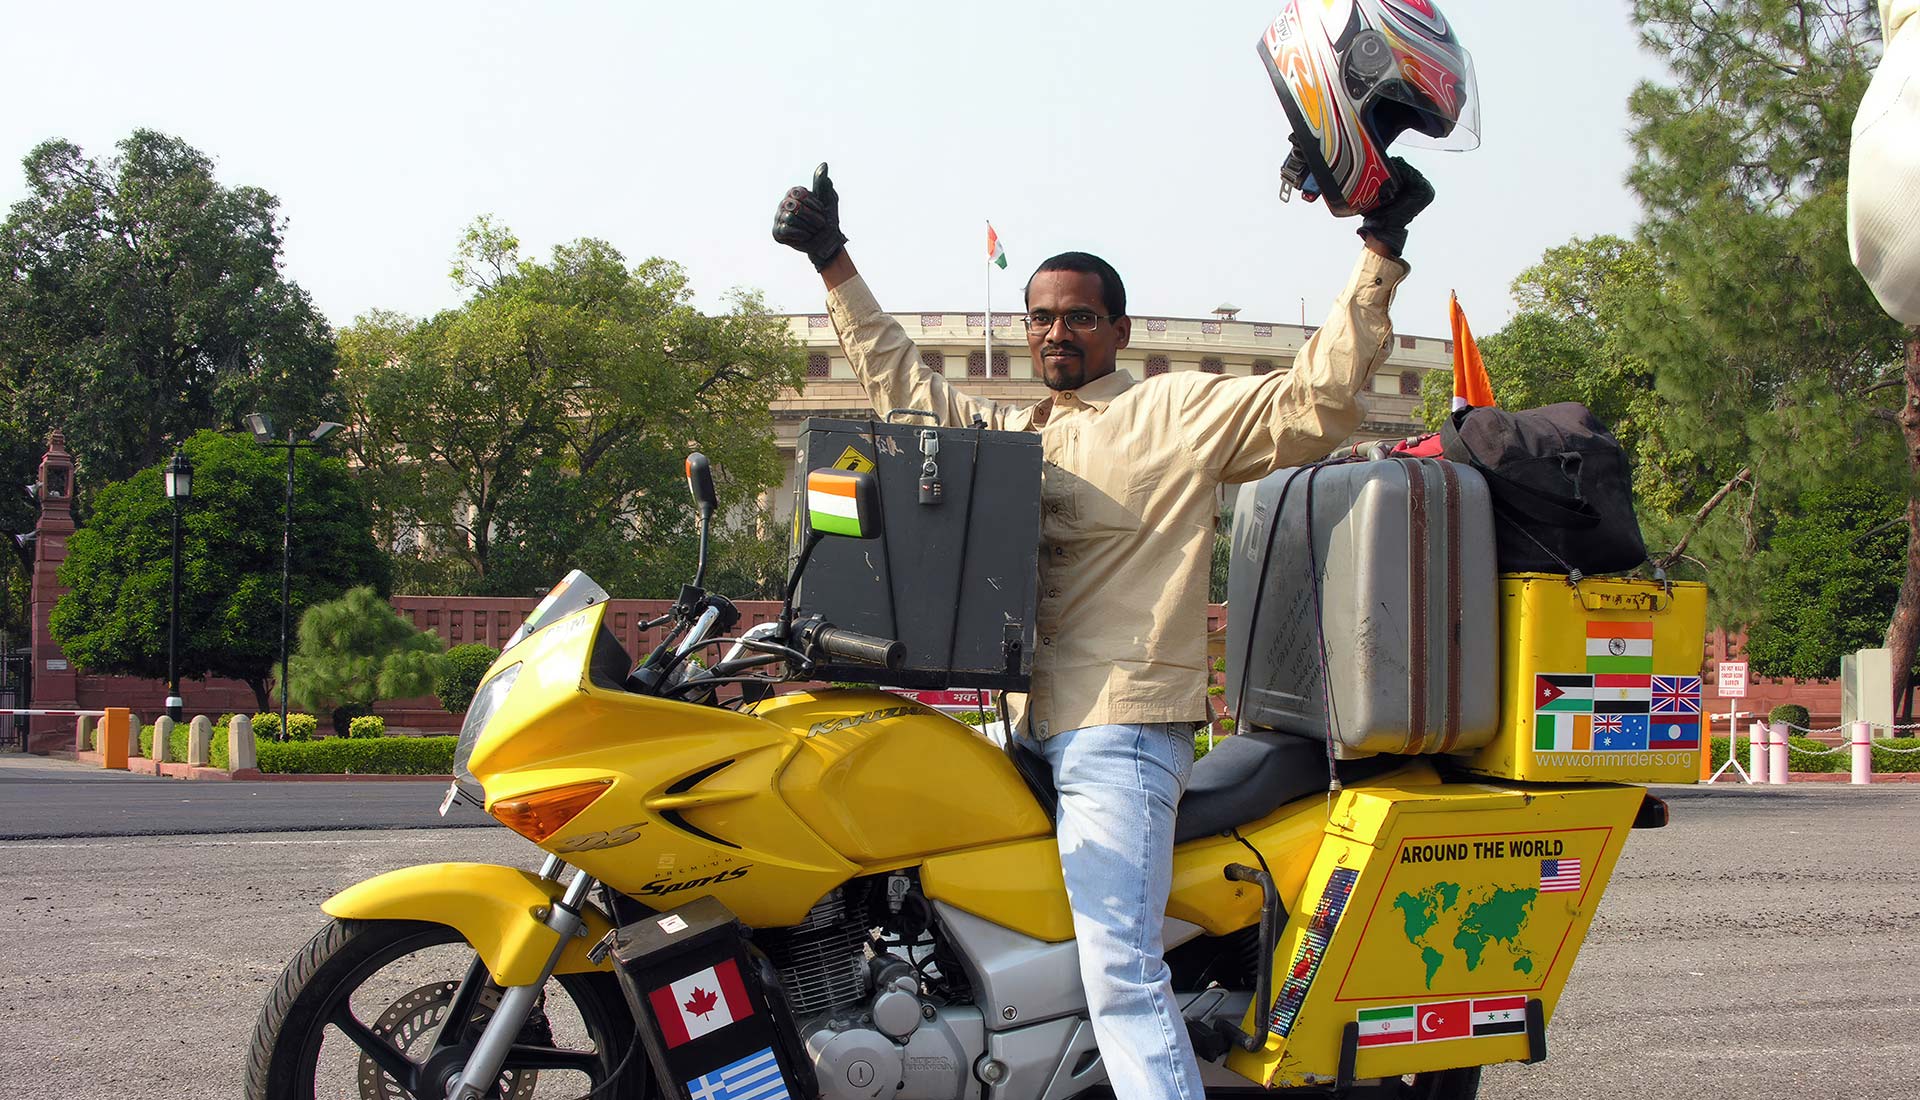 Bharadwaj Dayala completed world tour on a motorcycle